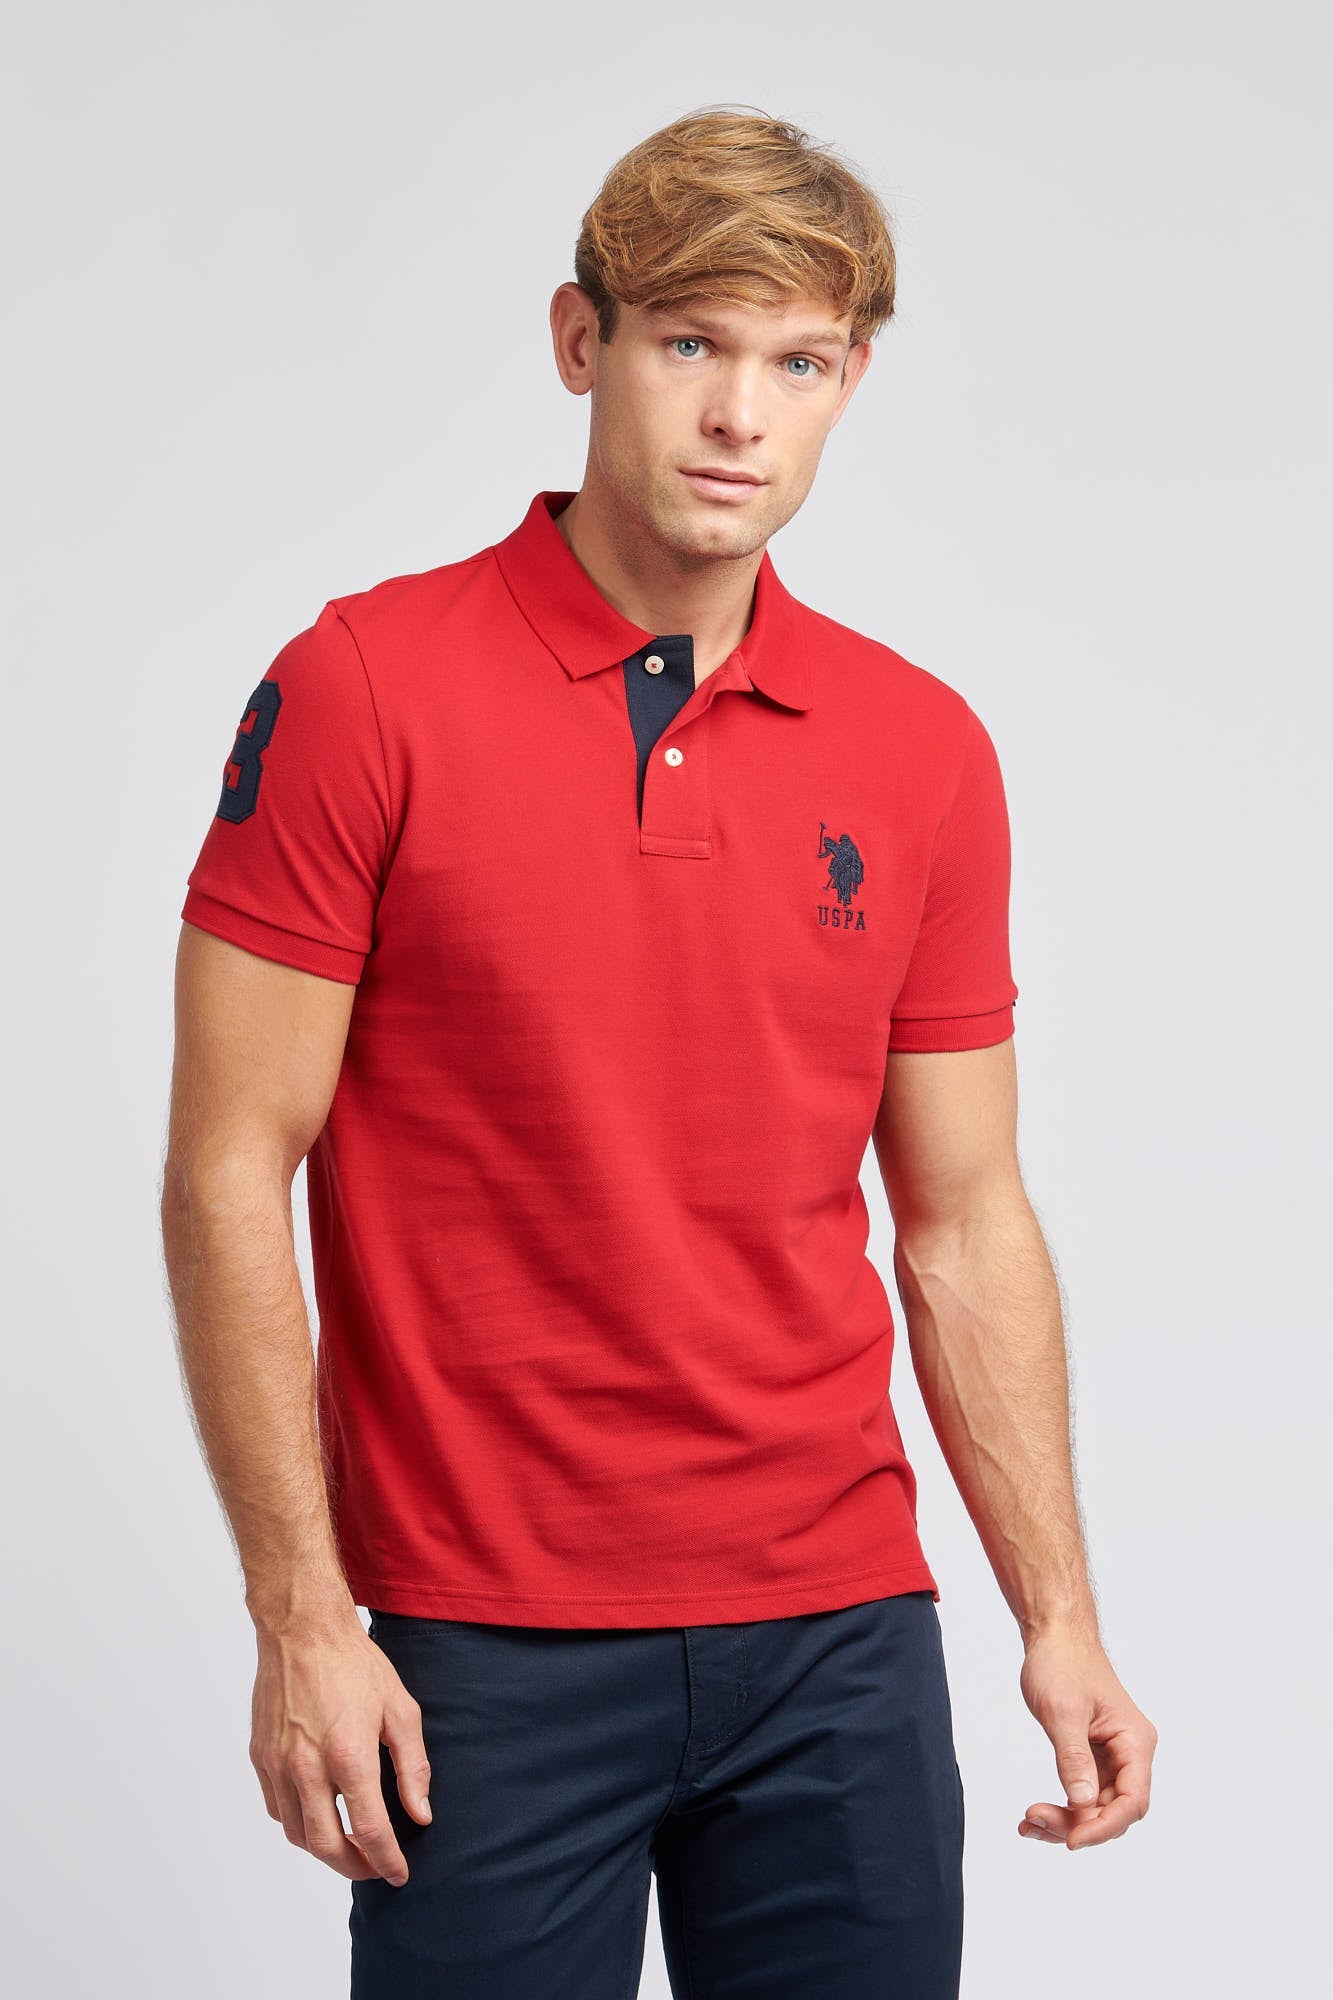 U.S. Polo Assn. Mens Player 3 Pique Polo Shirt in Haute Red